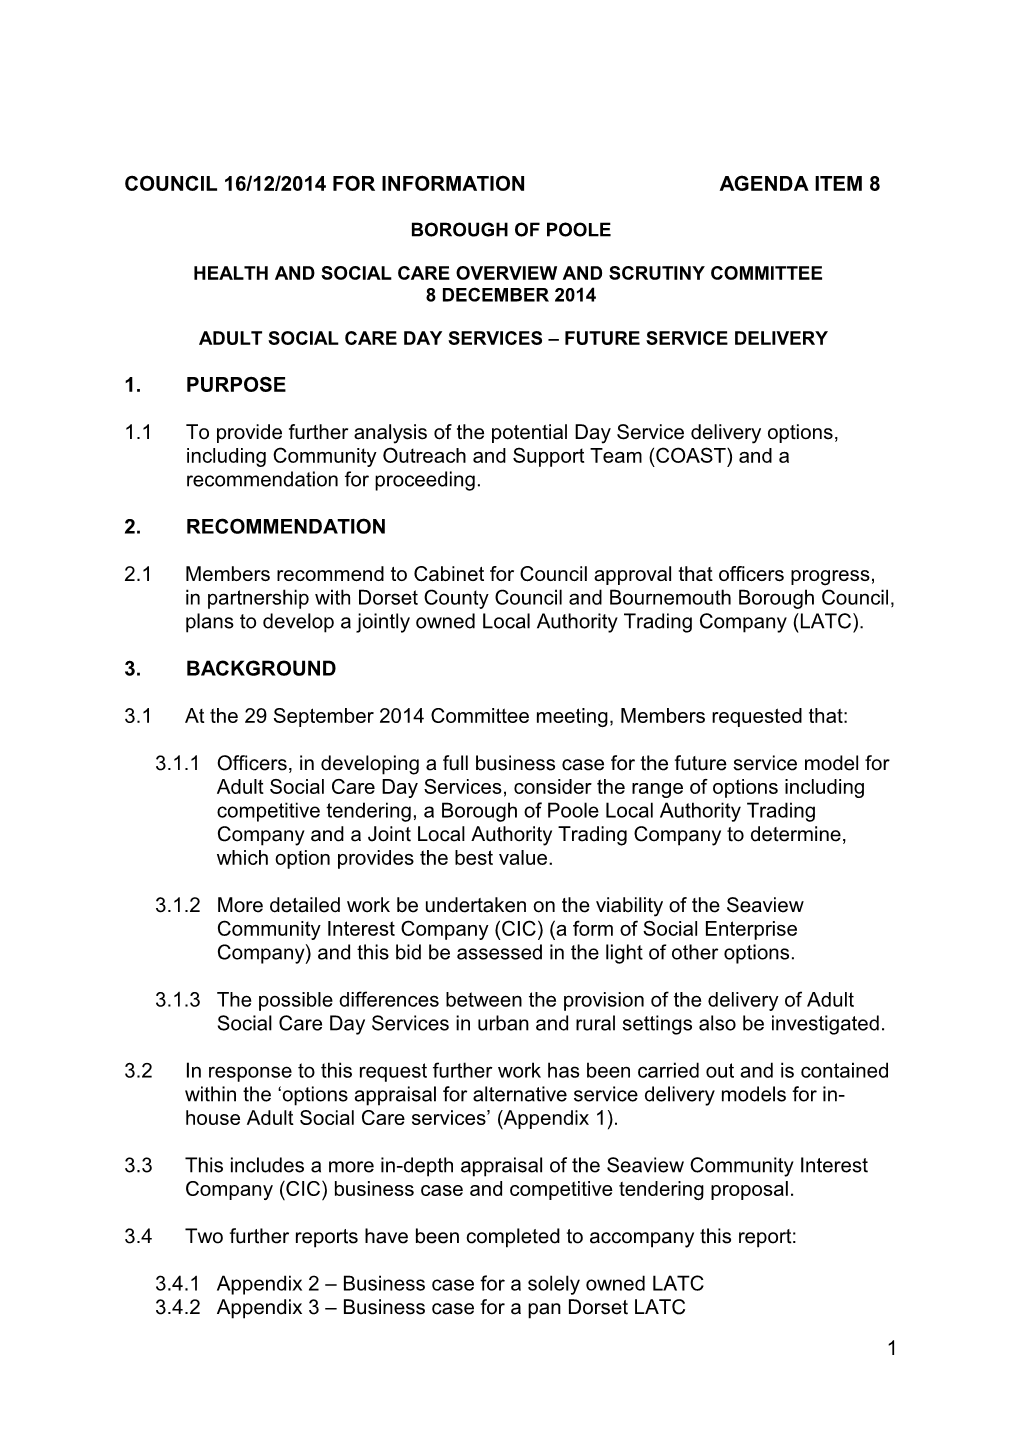 Council 16/12/2014 for Information Agenda Item 8